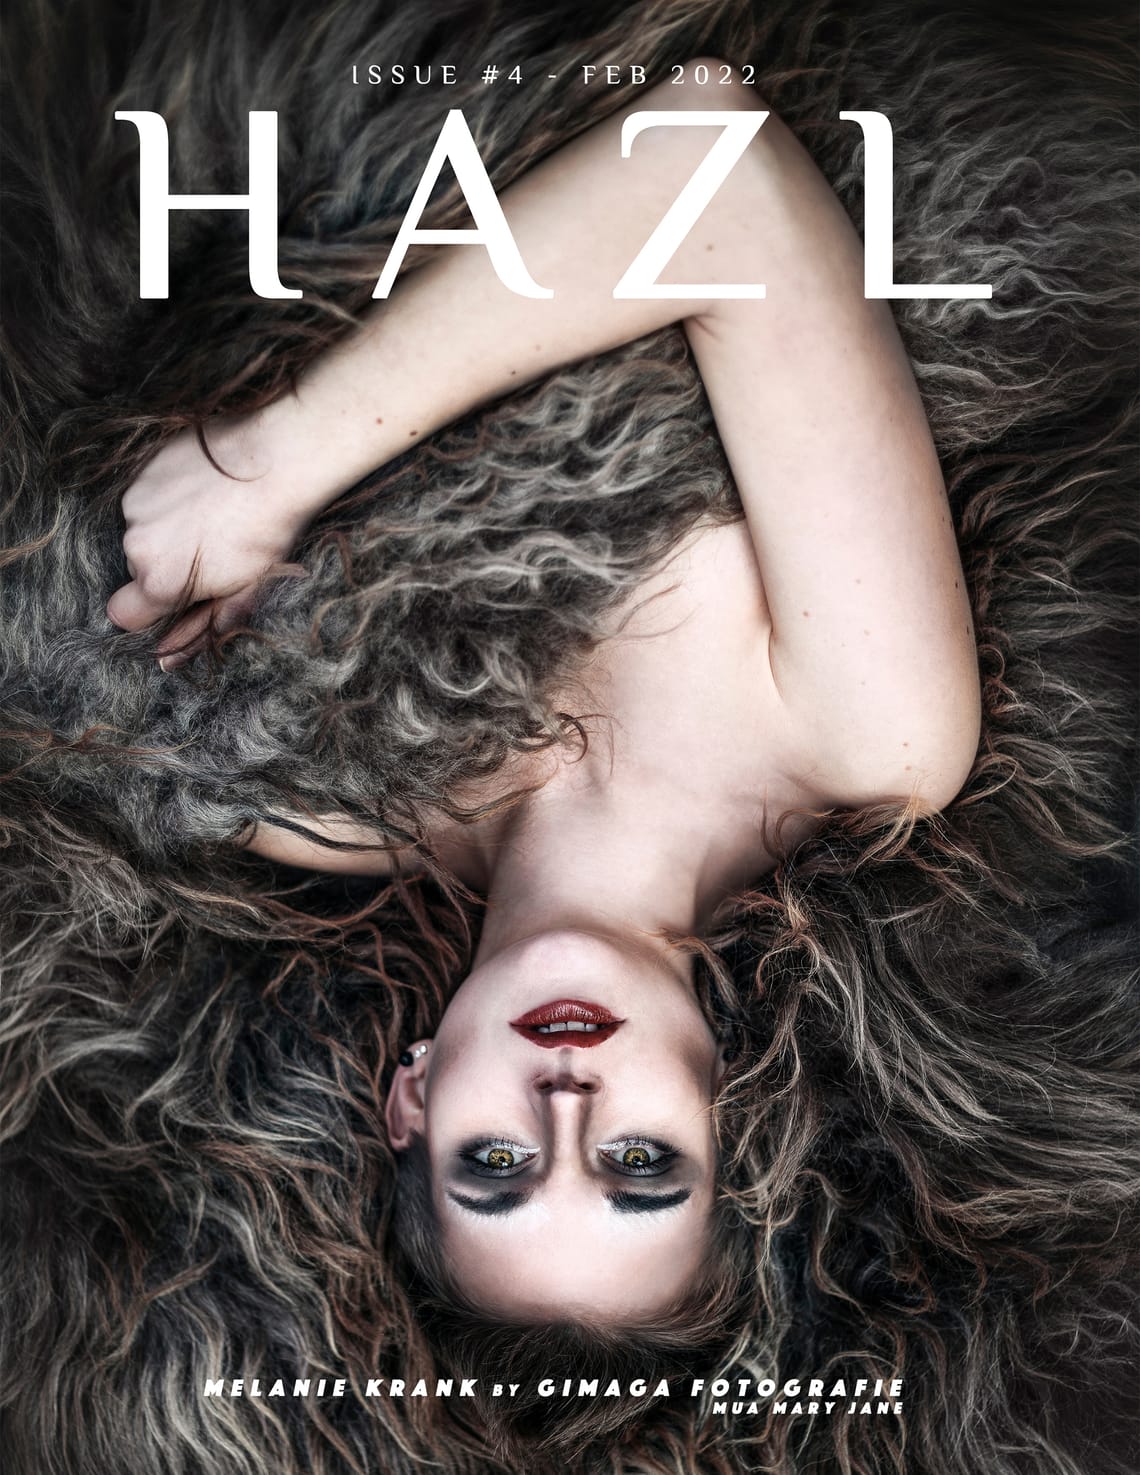 HAZL Magazine Issue #4 -  February 2022 Launched Worldwide